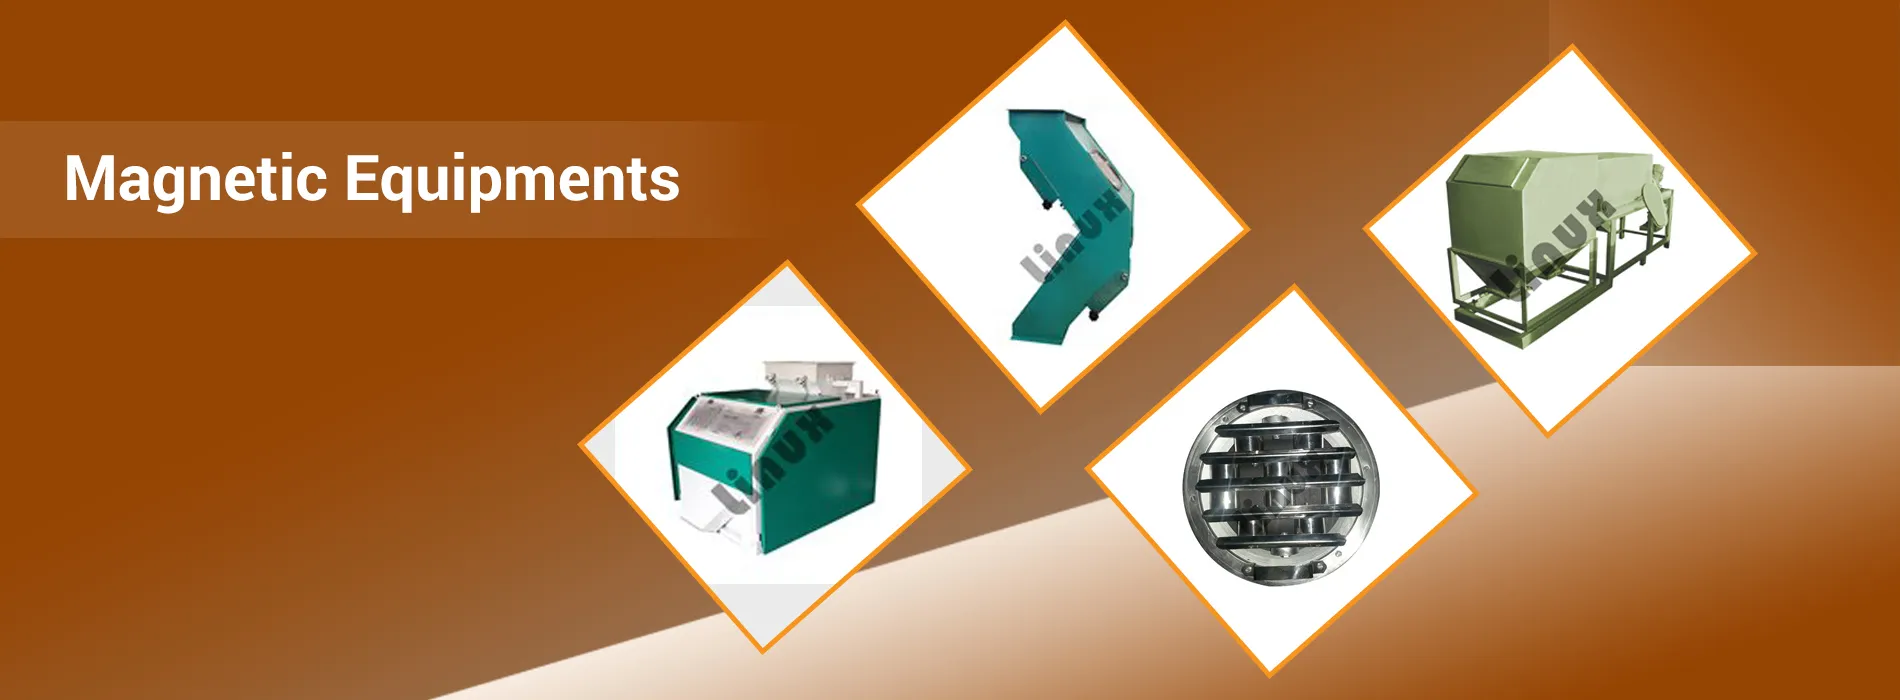 Magnetic Equipment Manufacturer in India